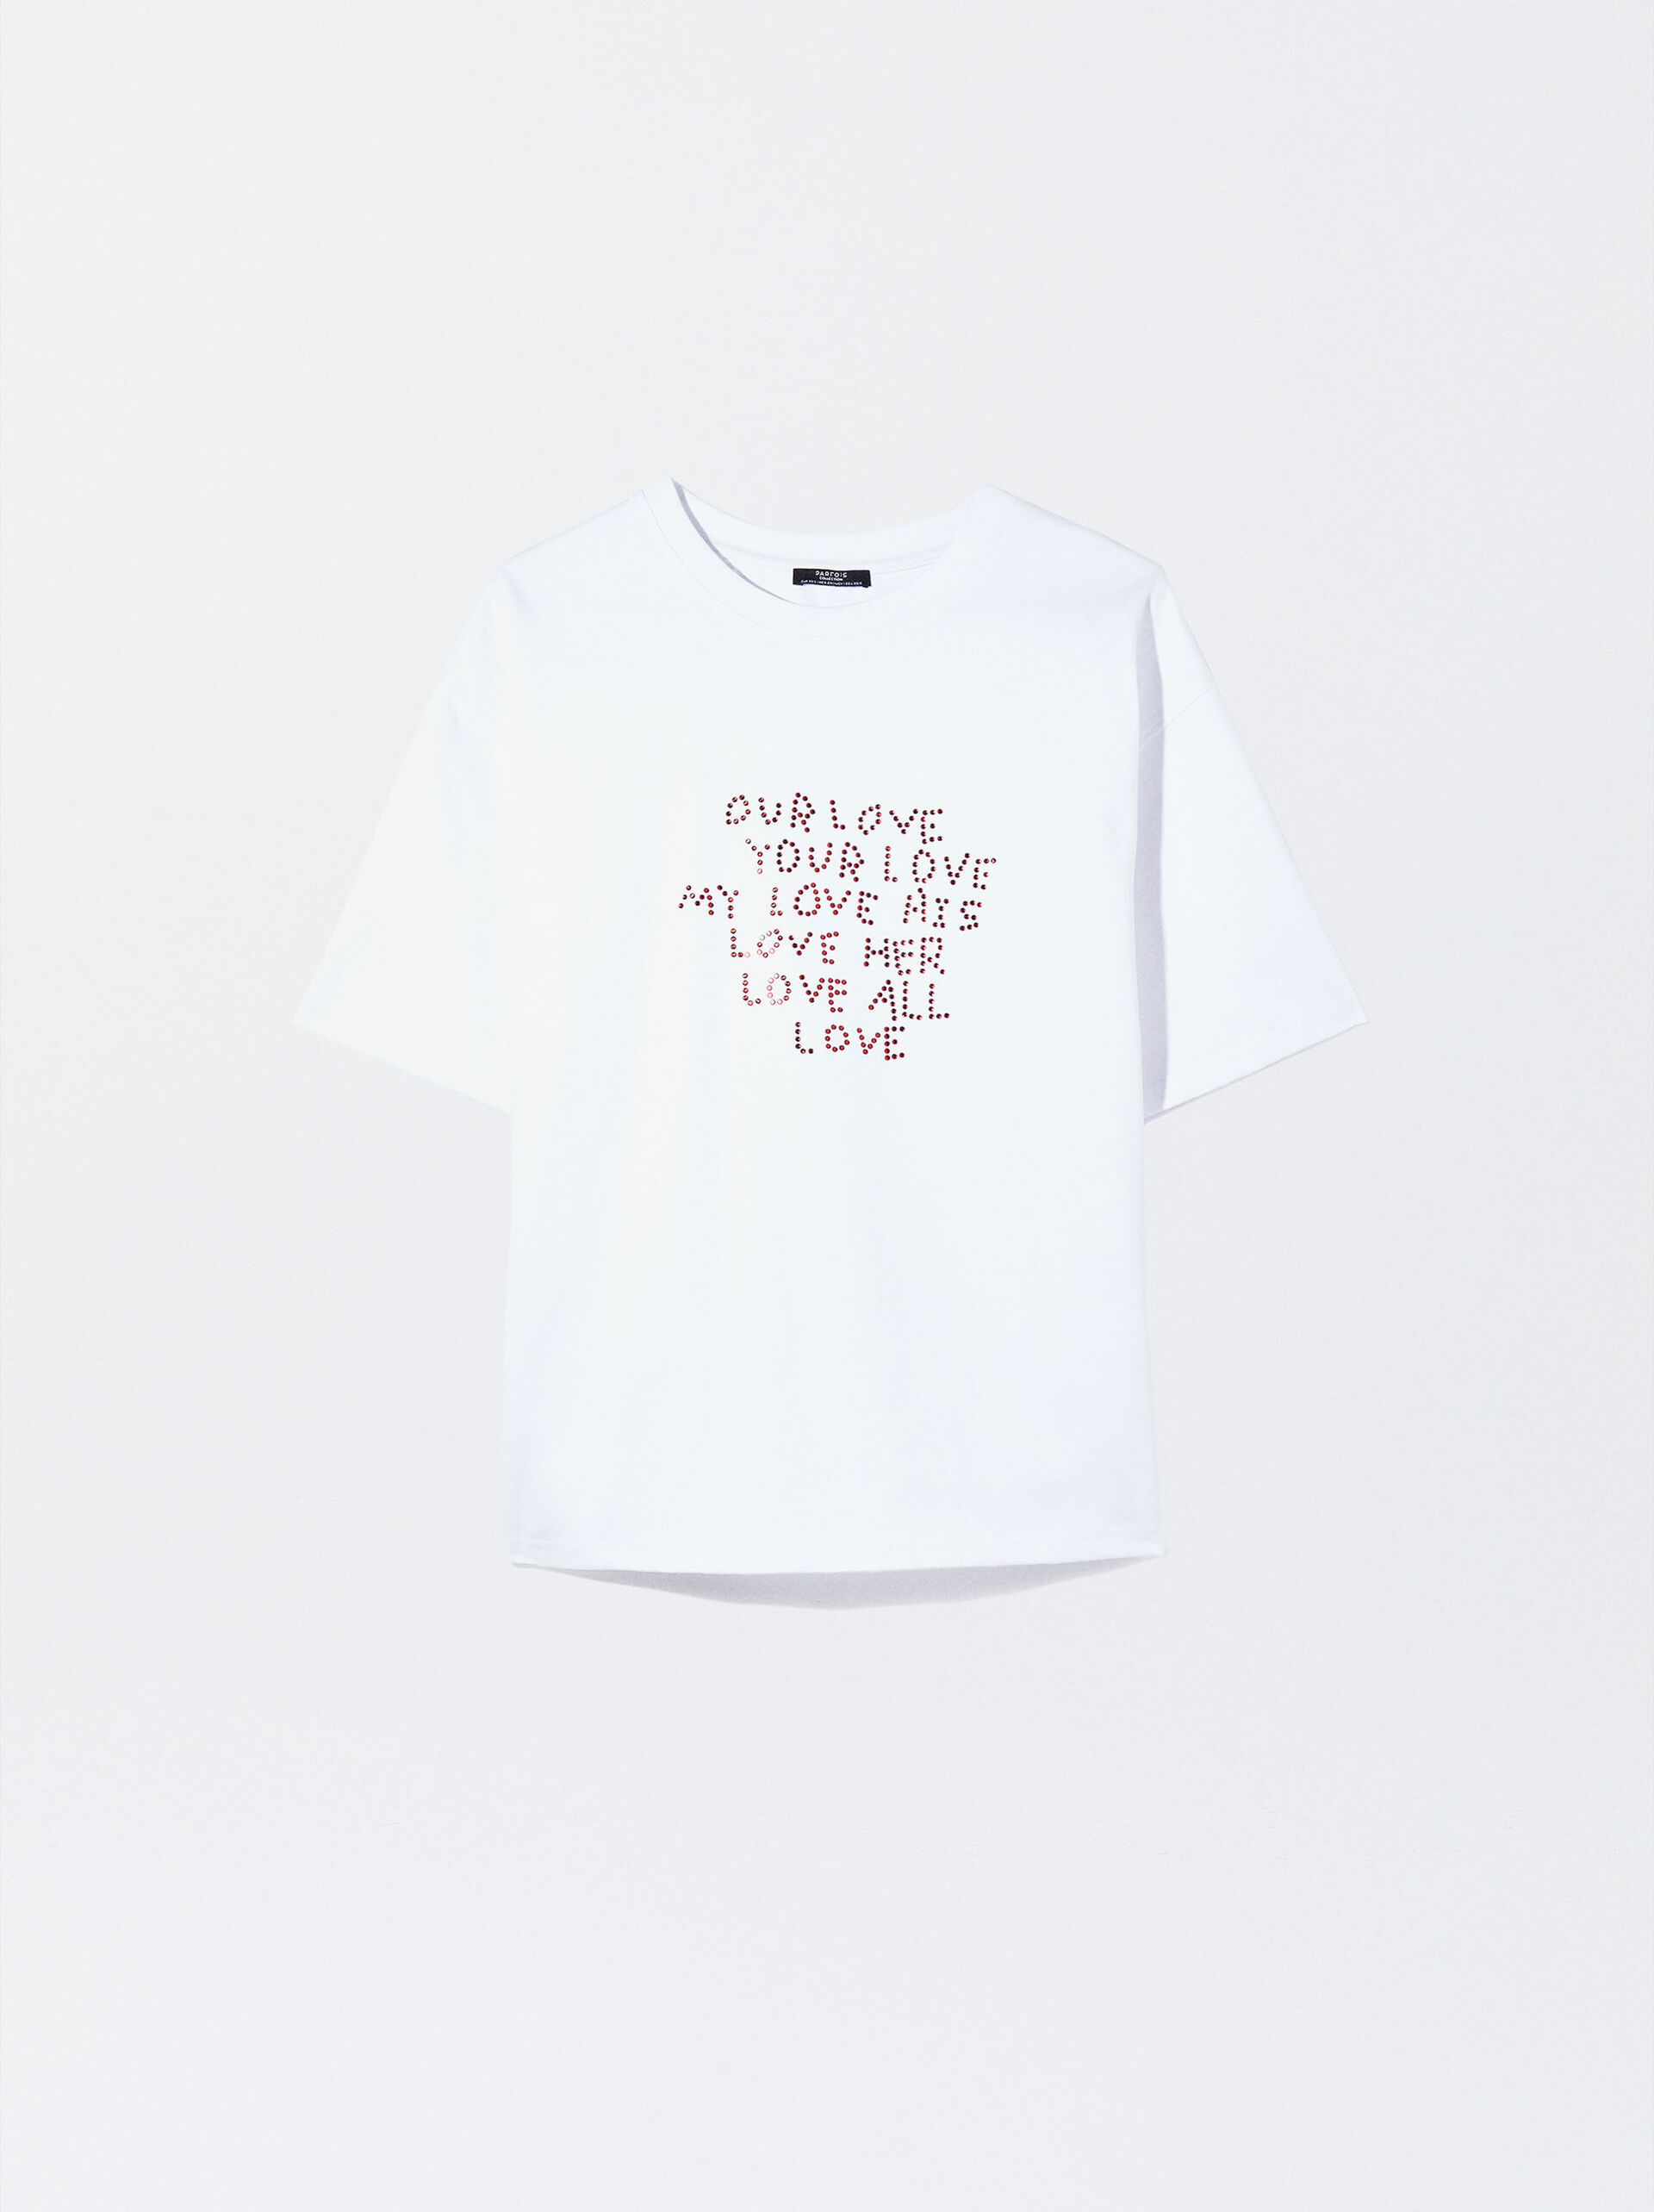 Exclusivo Online - T-Shirt Algodão Love image number 5.0